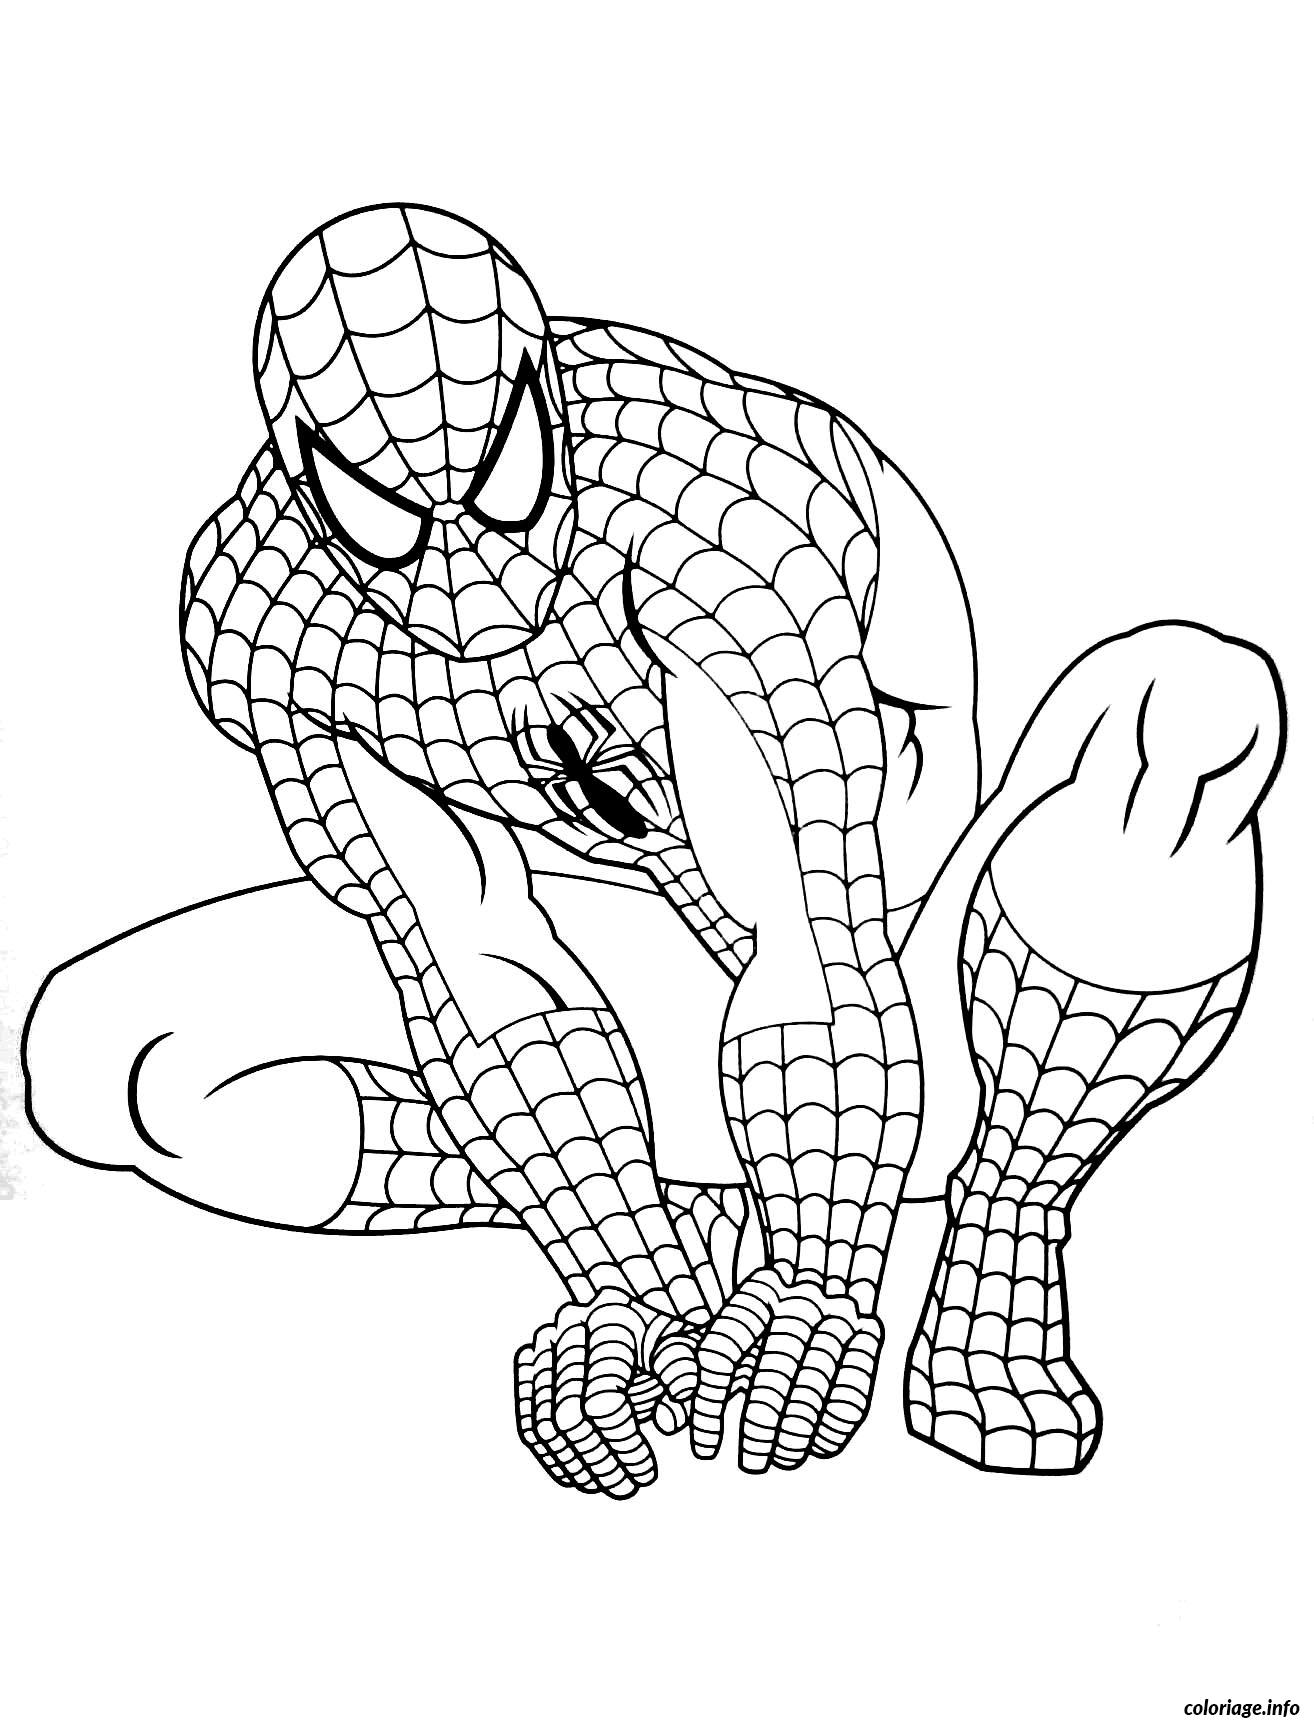 Coloriage Spiderman 9 Dessin Spiderman à imprimer